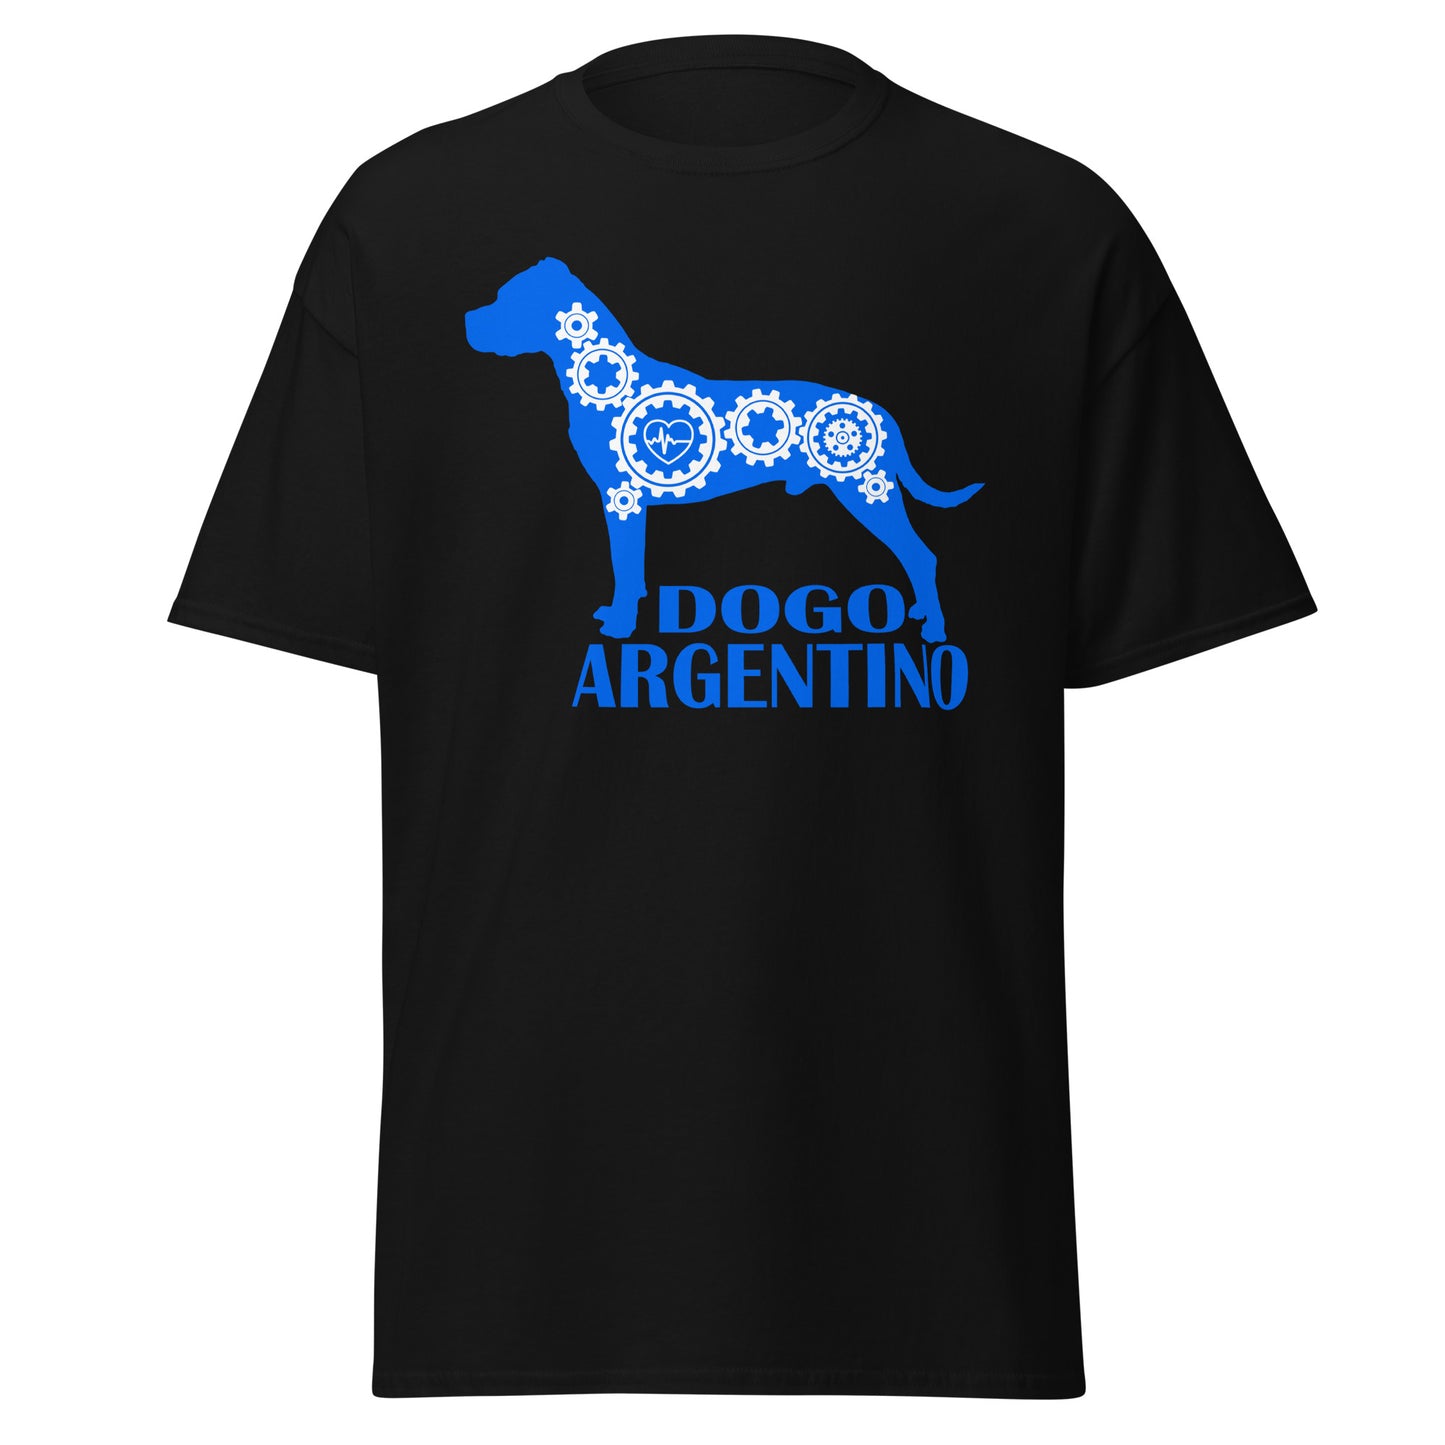 Dogo Argentino Bionic men’s black t-shirt by Dog Artistry.